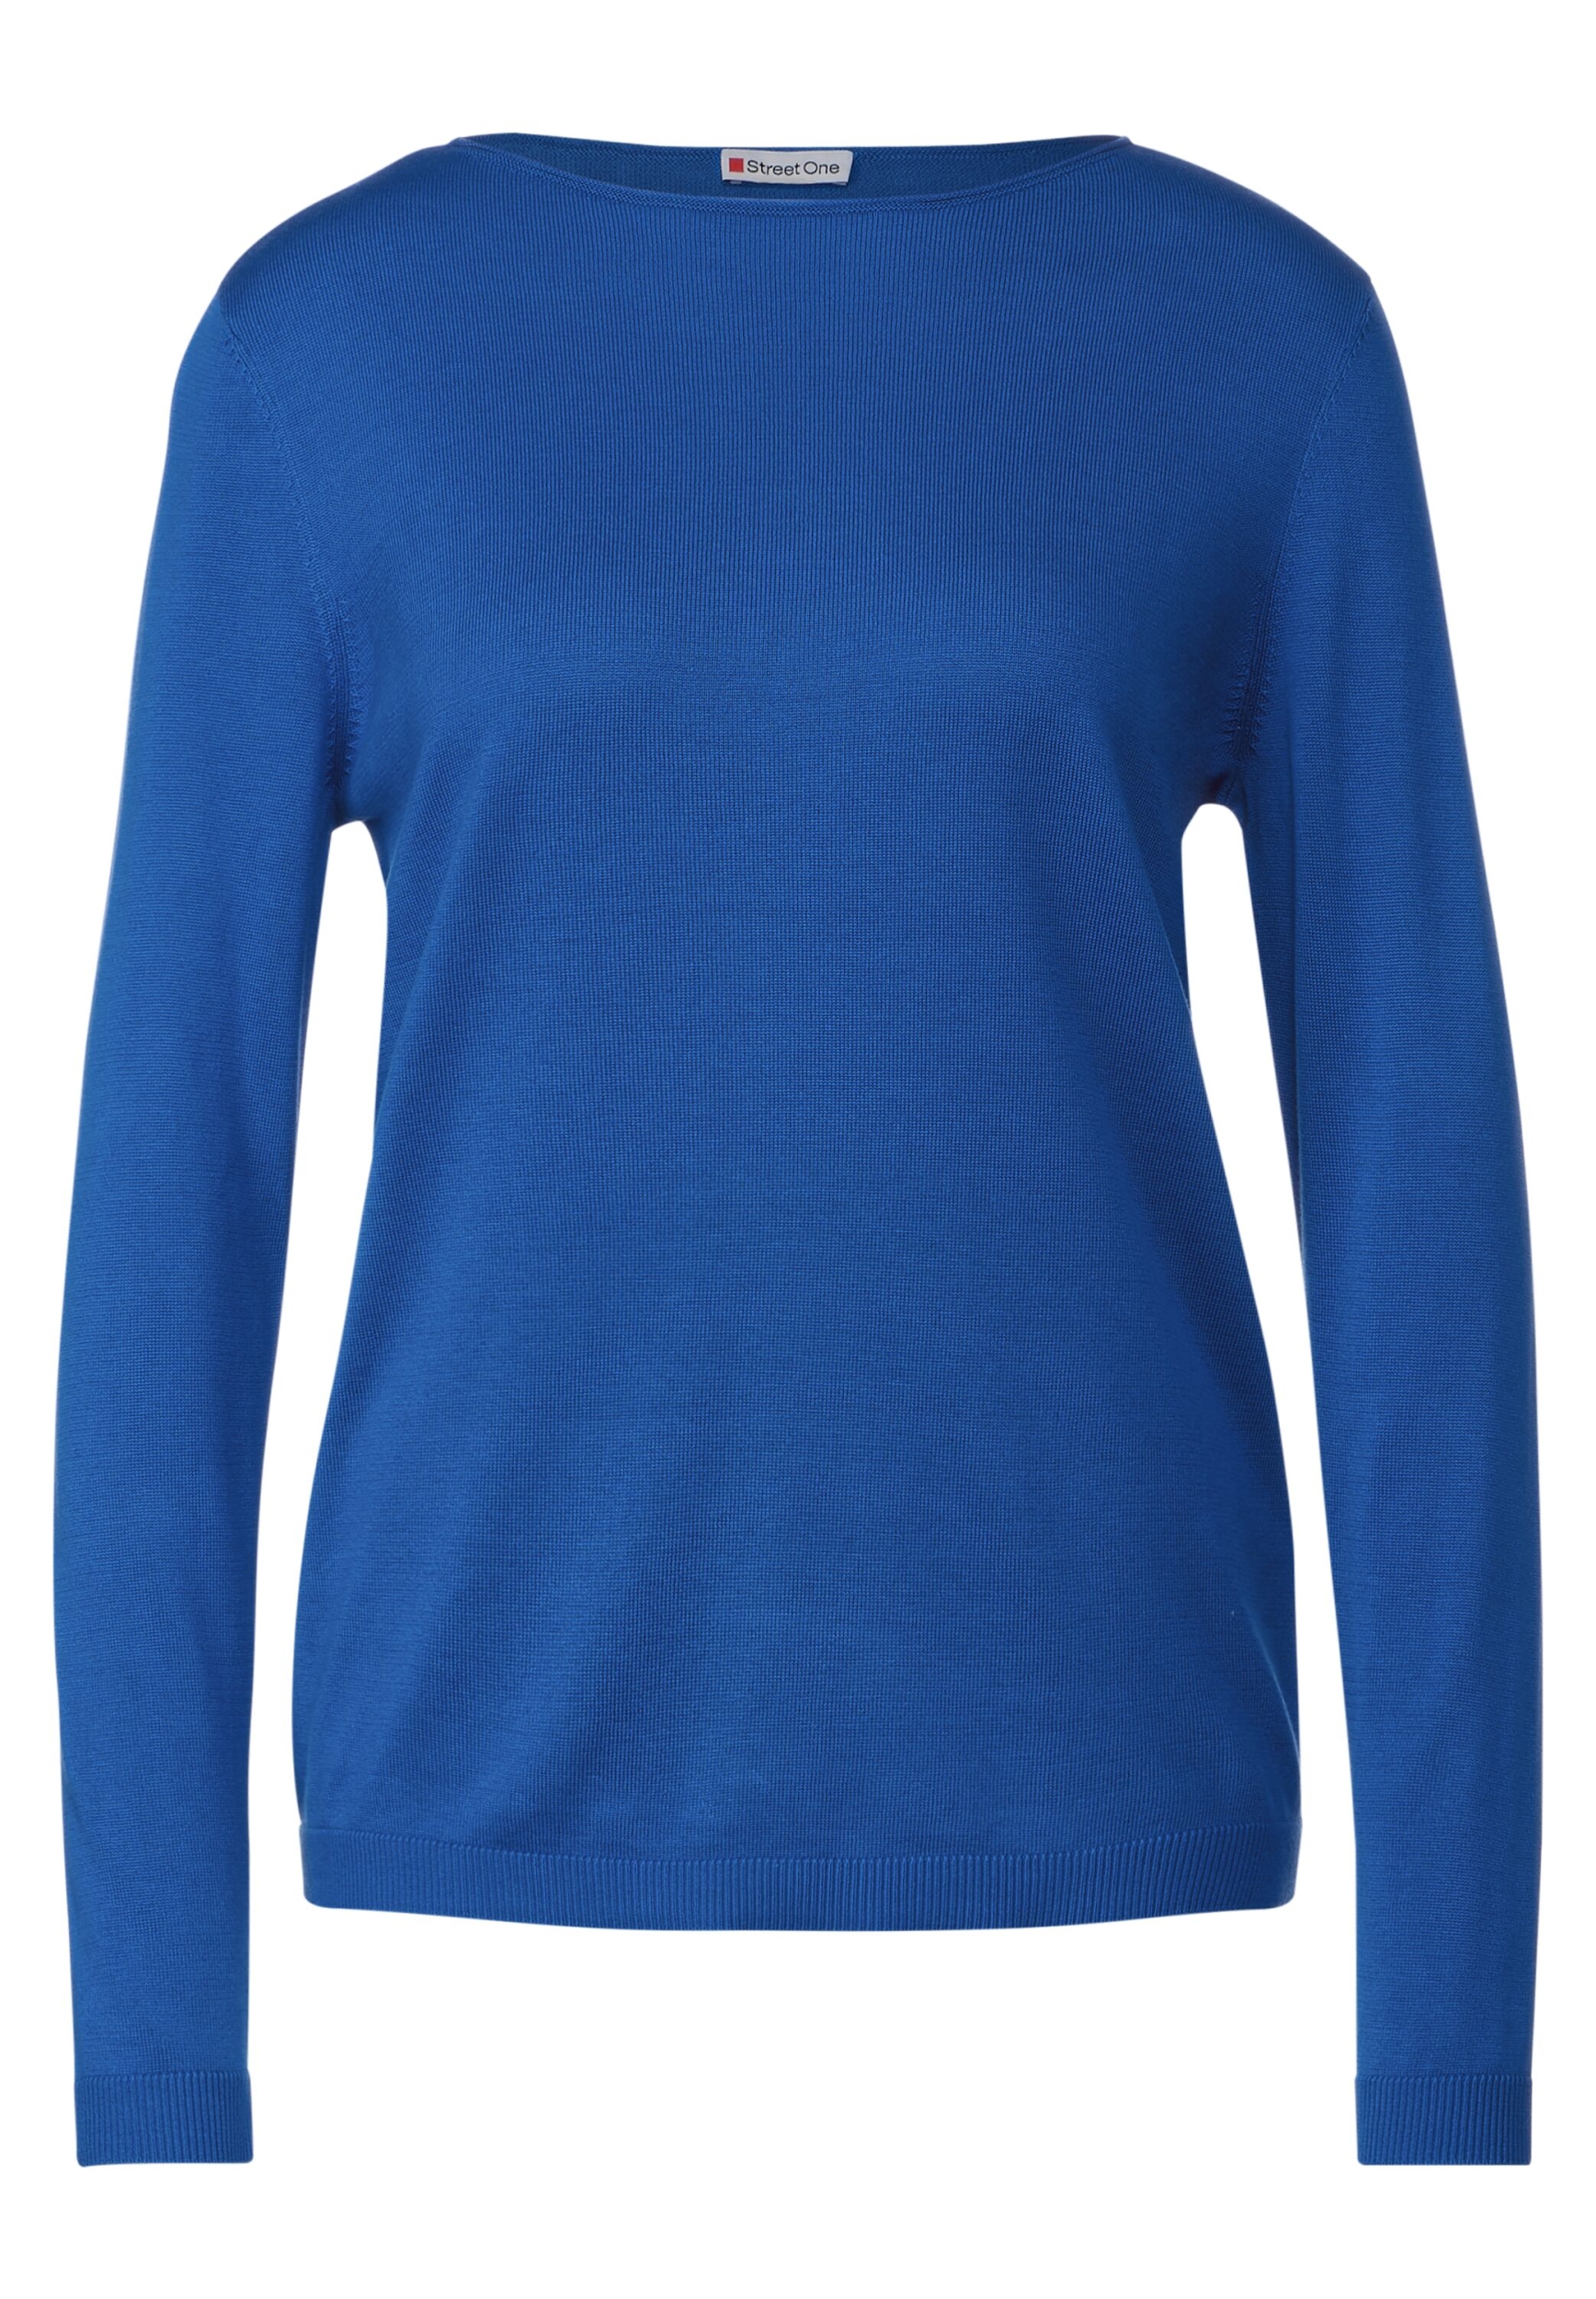 LTD QR basic u-boat | A302548-15377-34 | | sweater blue intense 34 fresh gentle